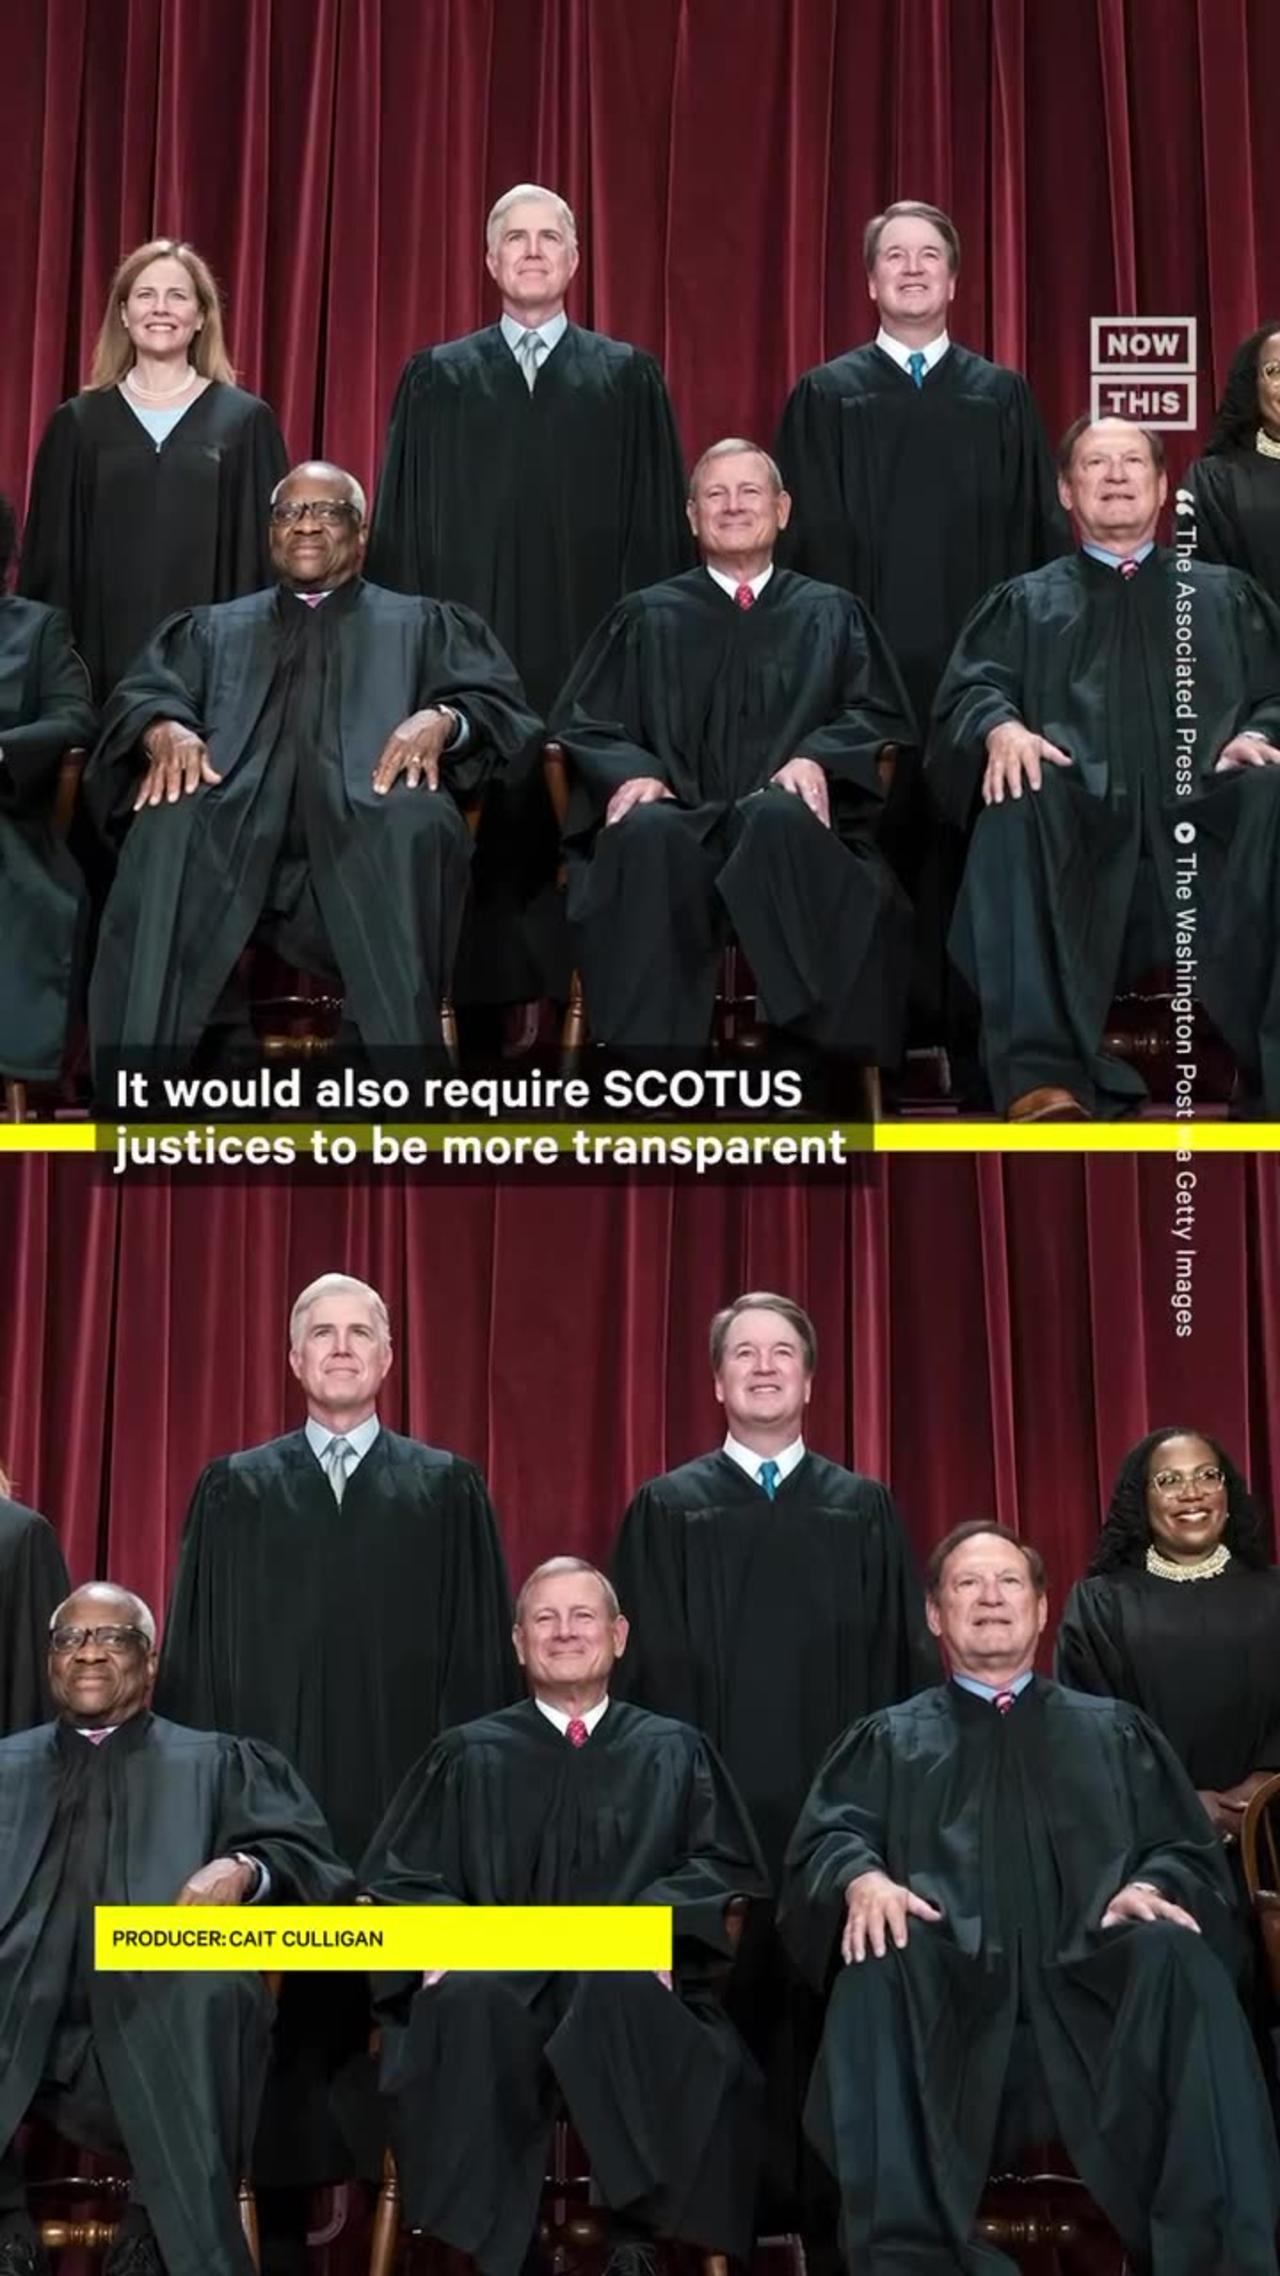 Supreme Court adopts an ethics code